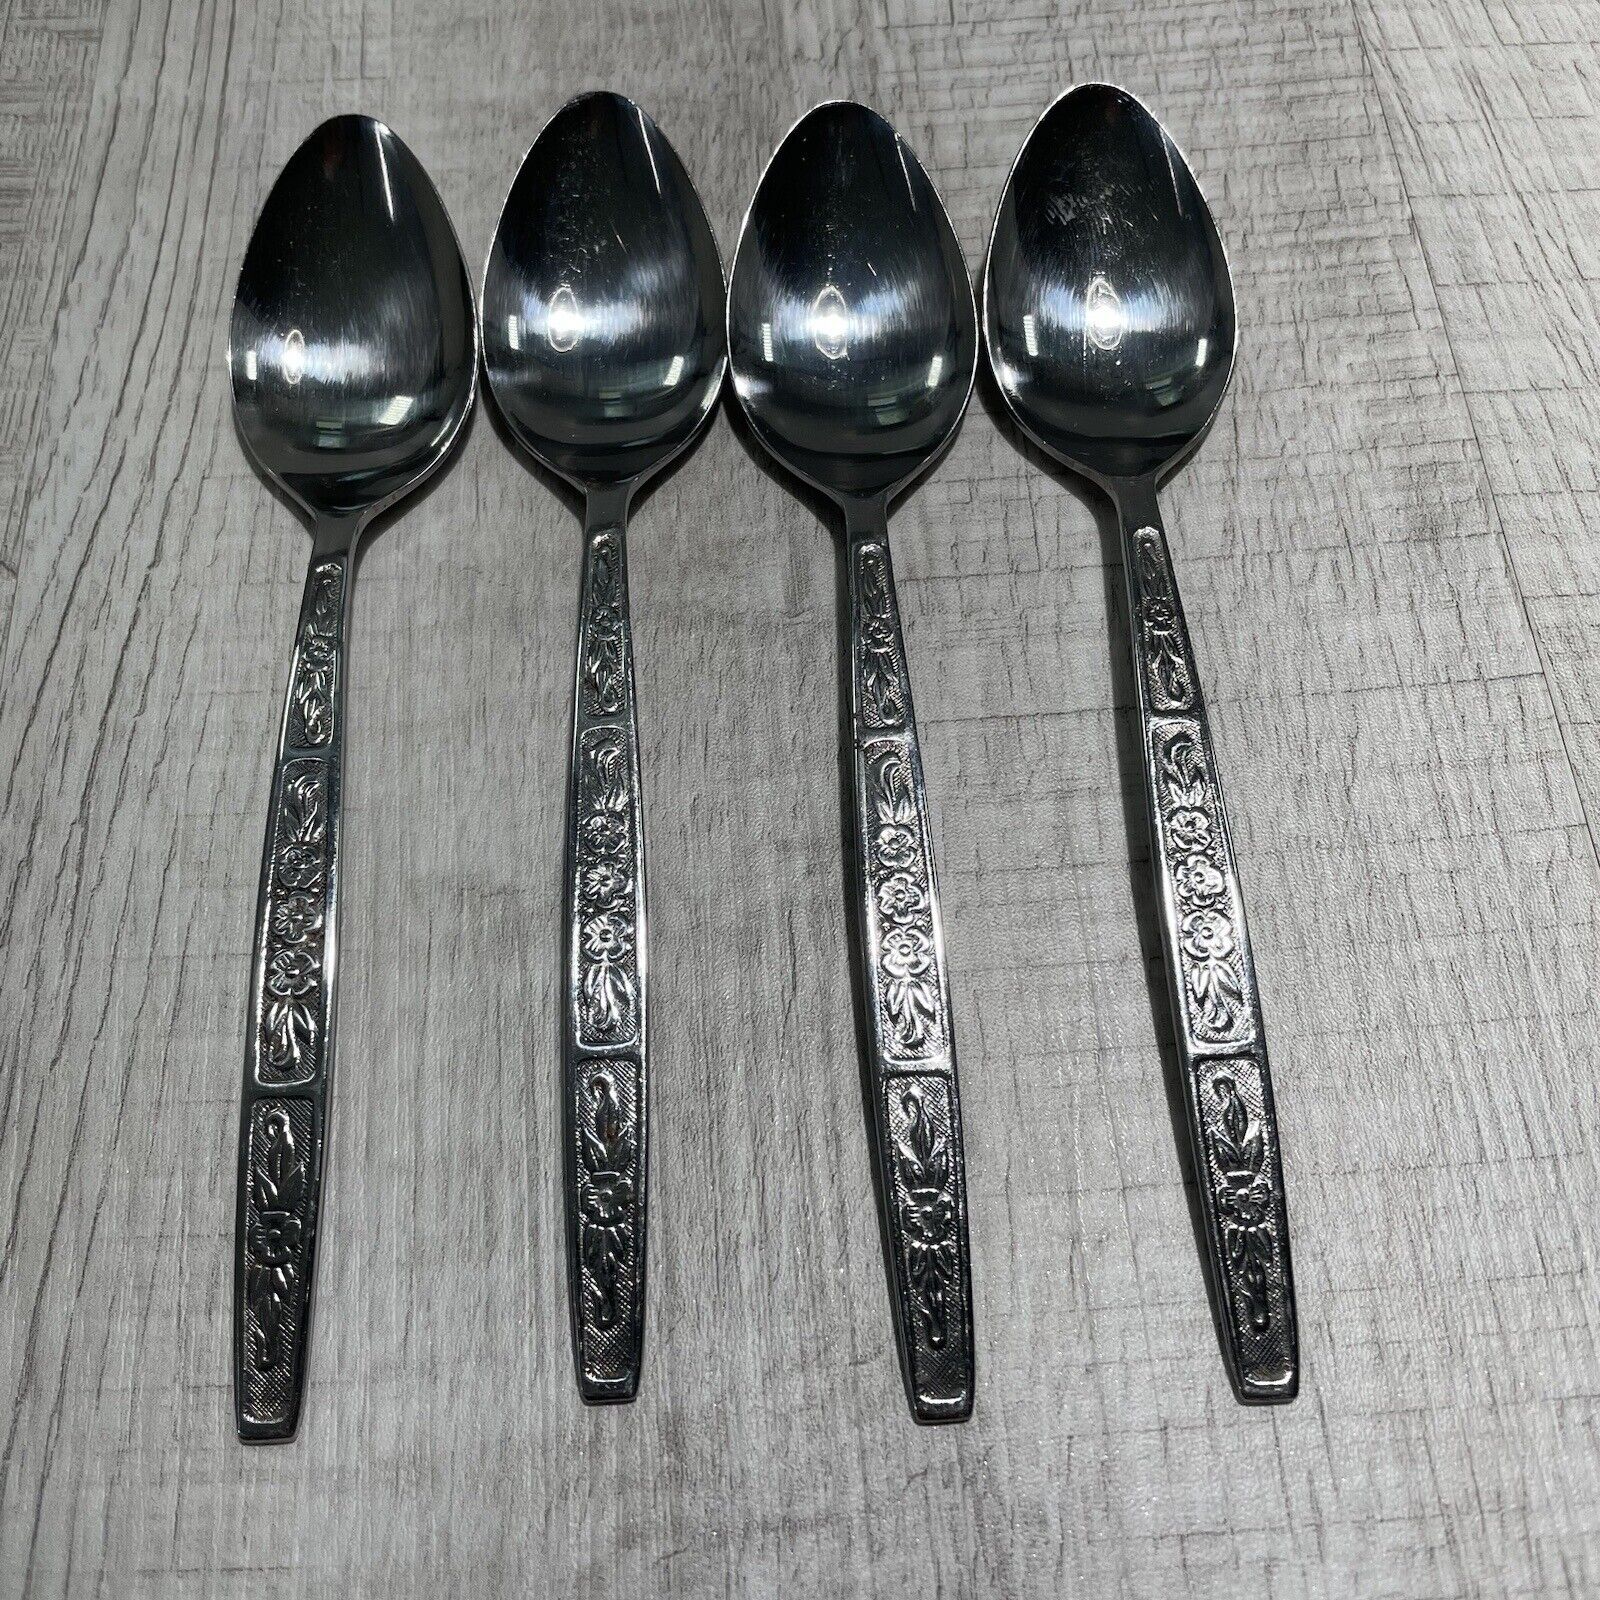 Imperial Teaspoon IMI57 Flatware Japan Floral VTG Spoon Lot Of 4 Stainless Steel